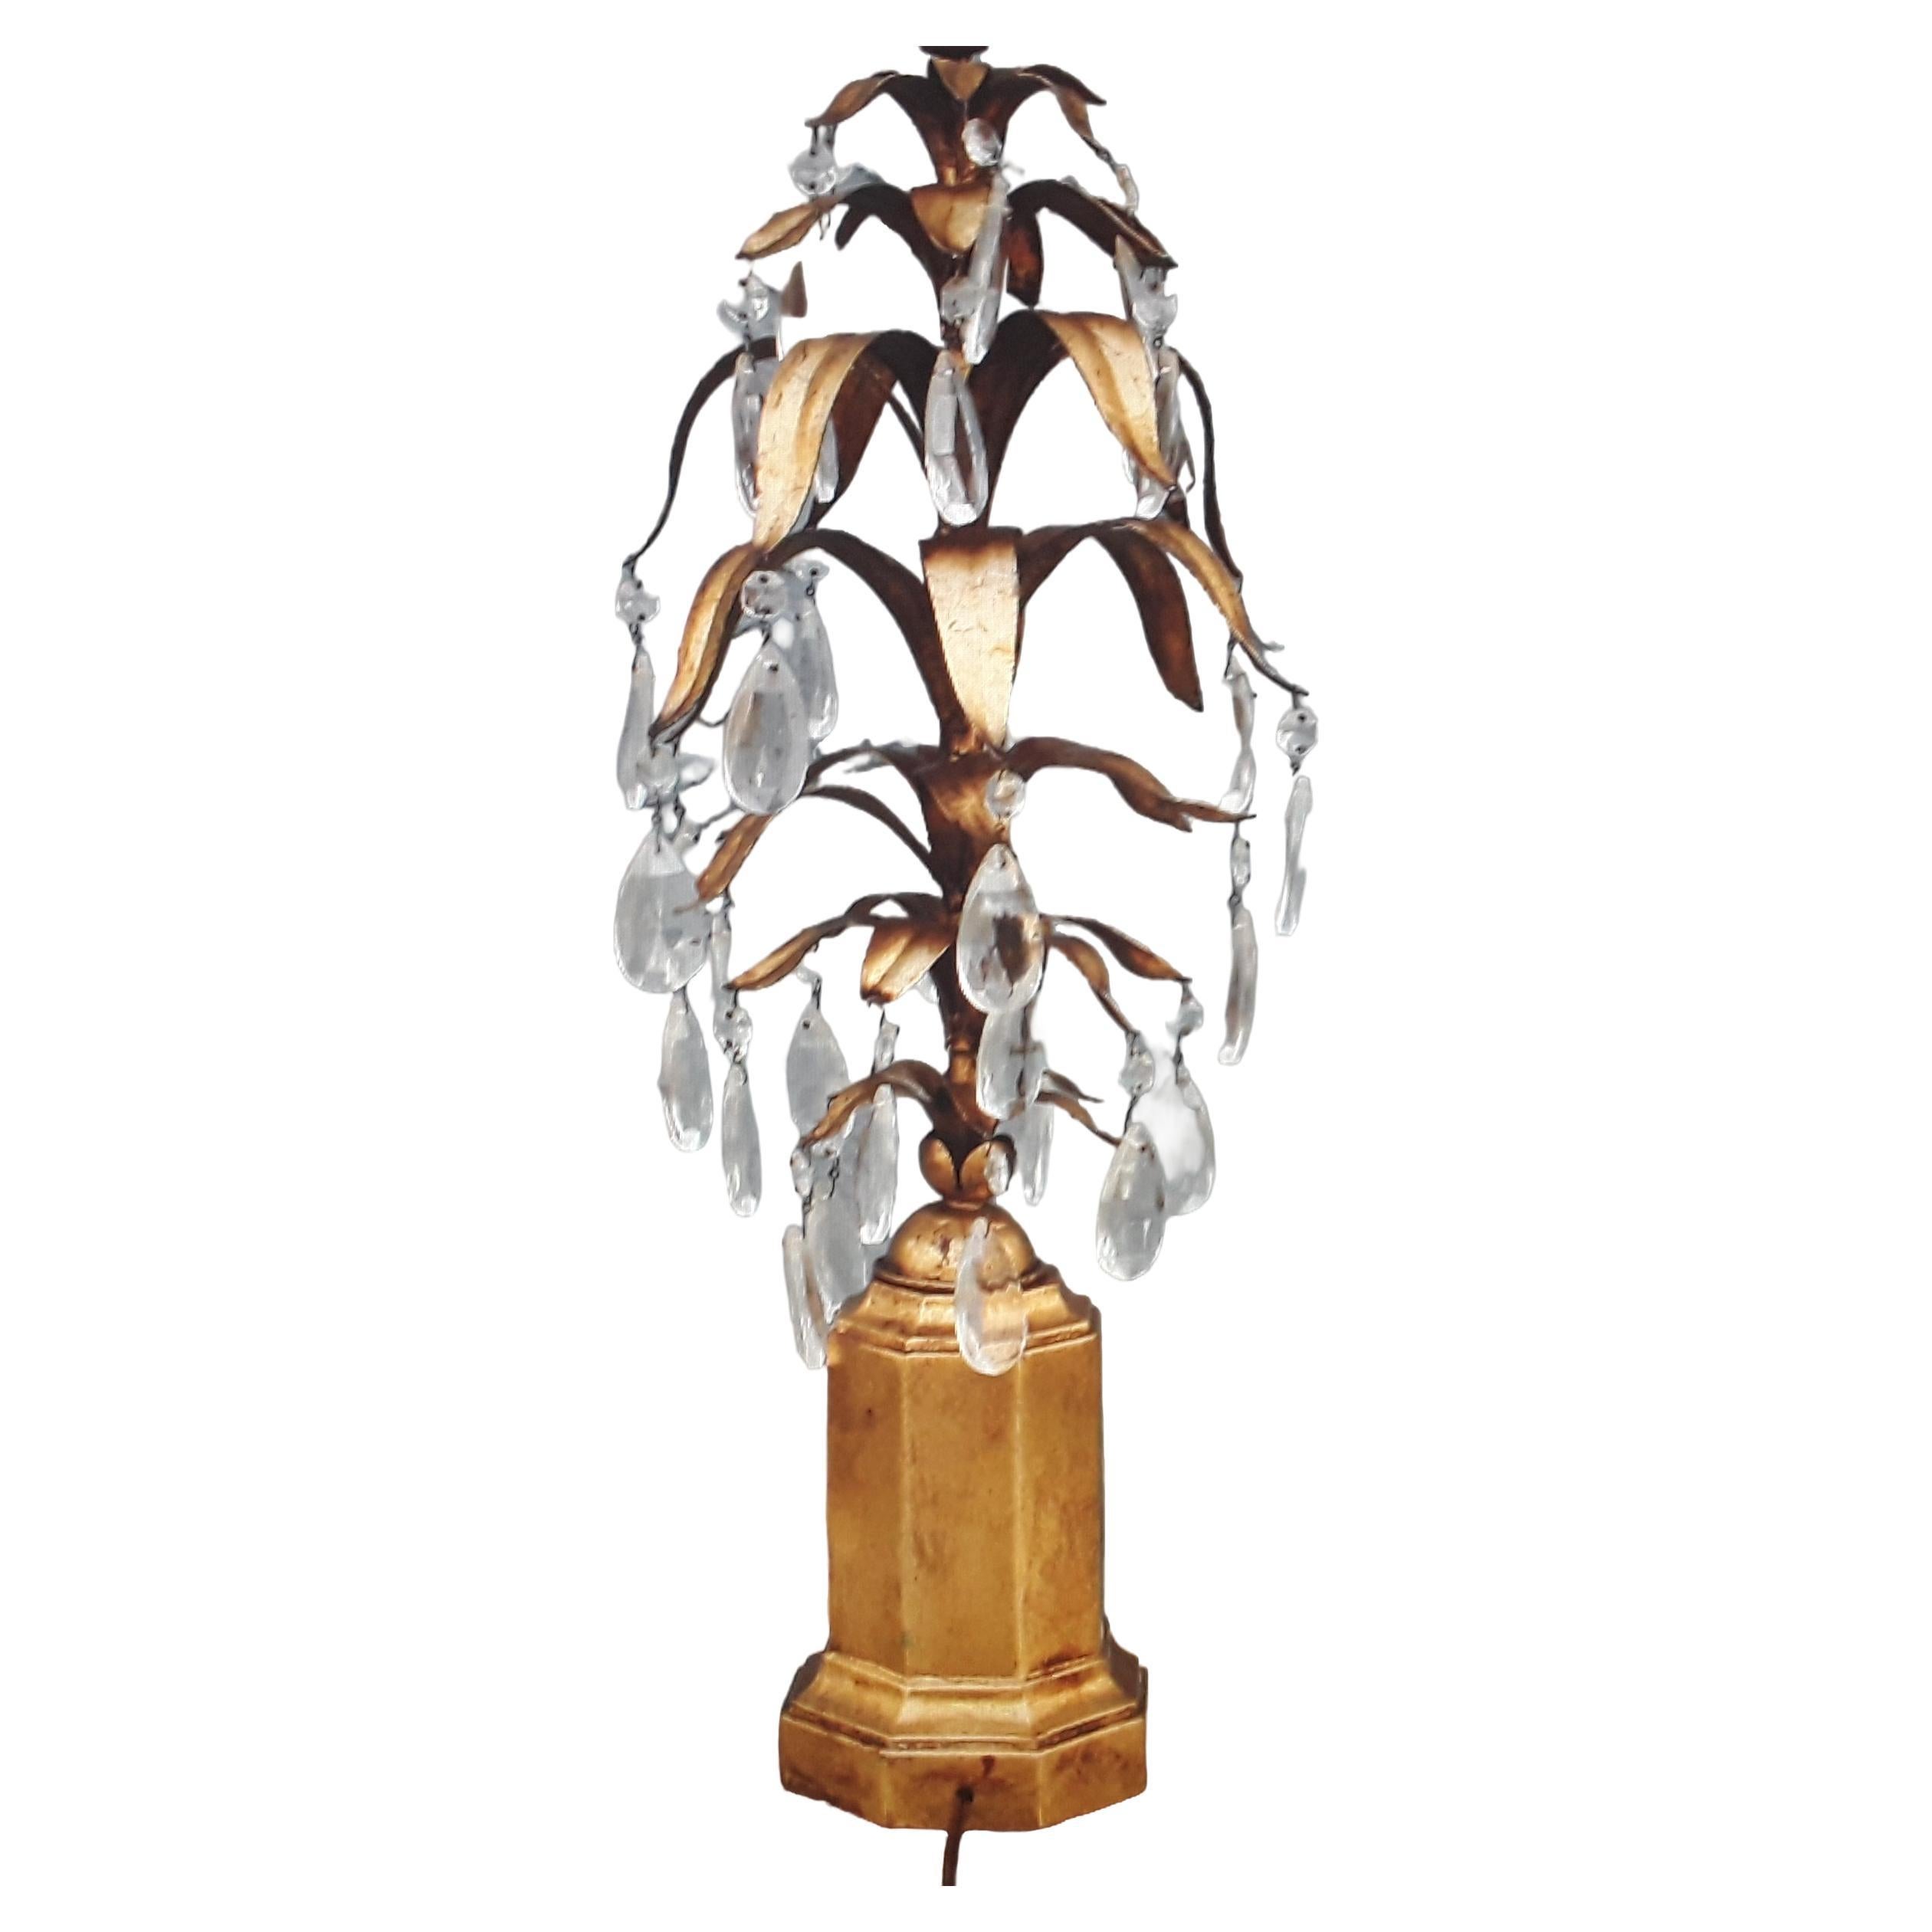 1950s Italian Hollywood Regency Giltwood Based Crystal/Tole Fern Form Table Lamp